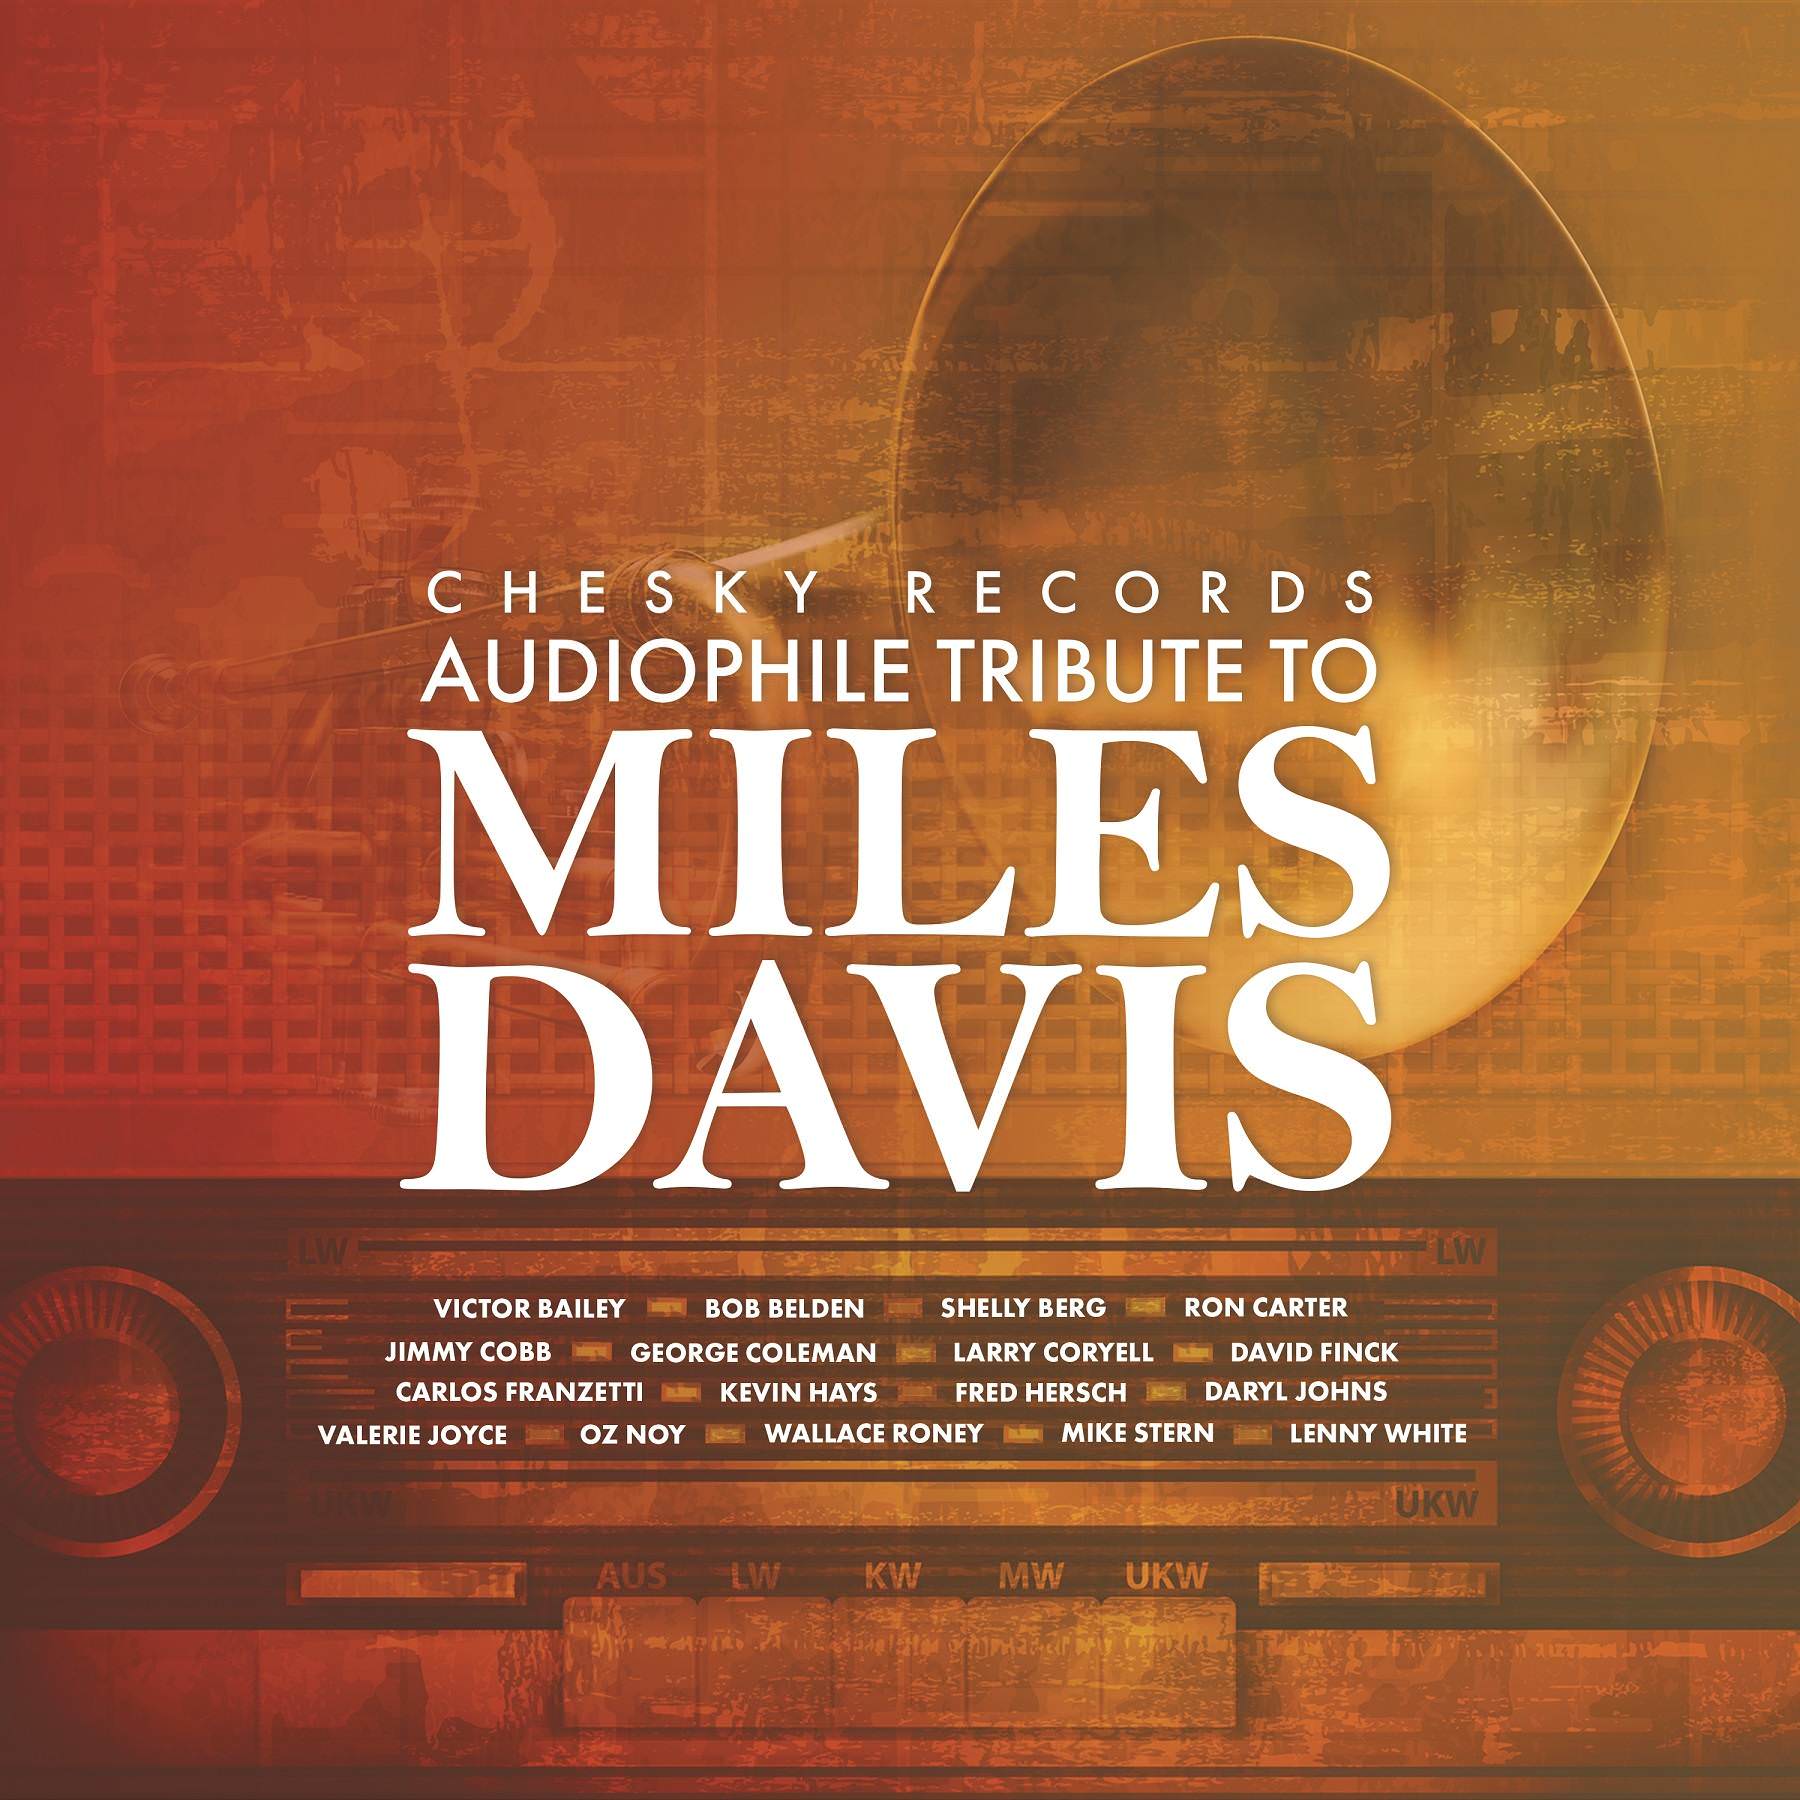 VA - Chesky Records Audiophile Tribute to Miles Davis (2018) [FLAC 24bit/96kHz]